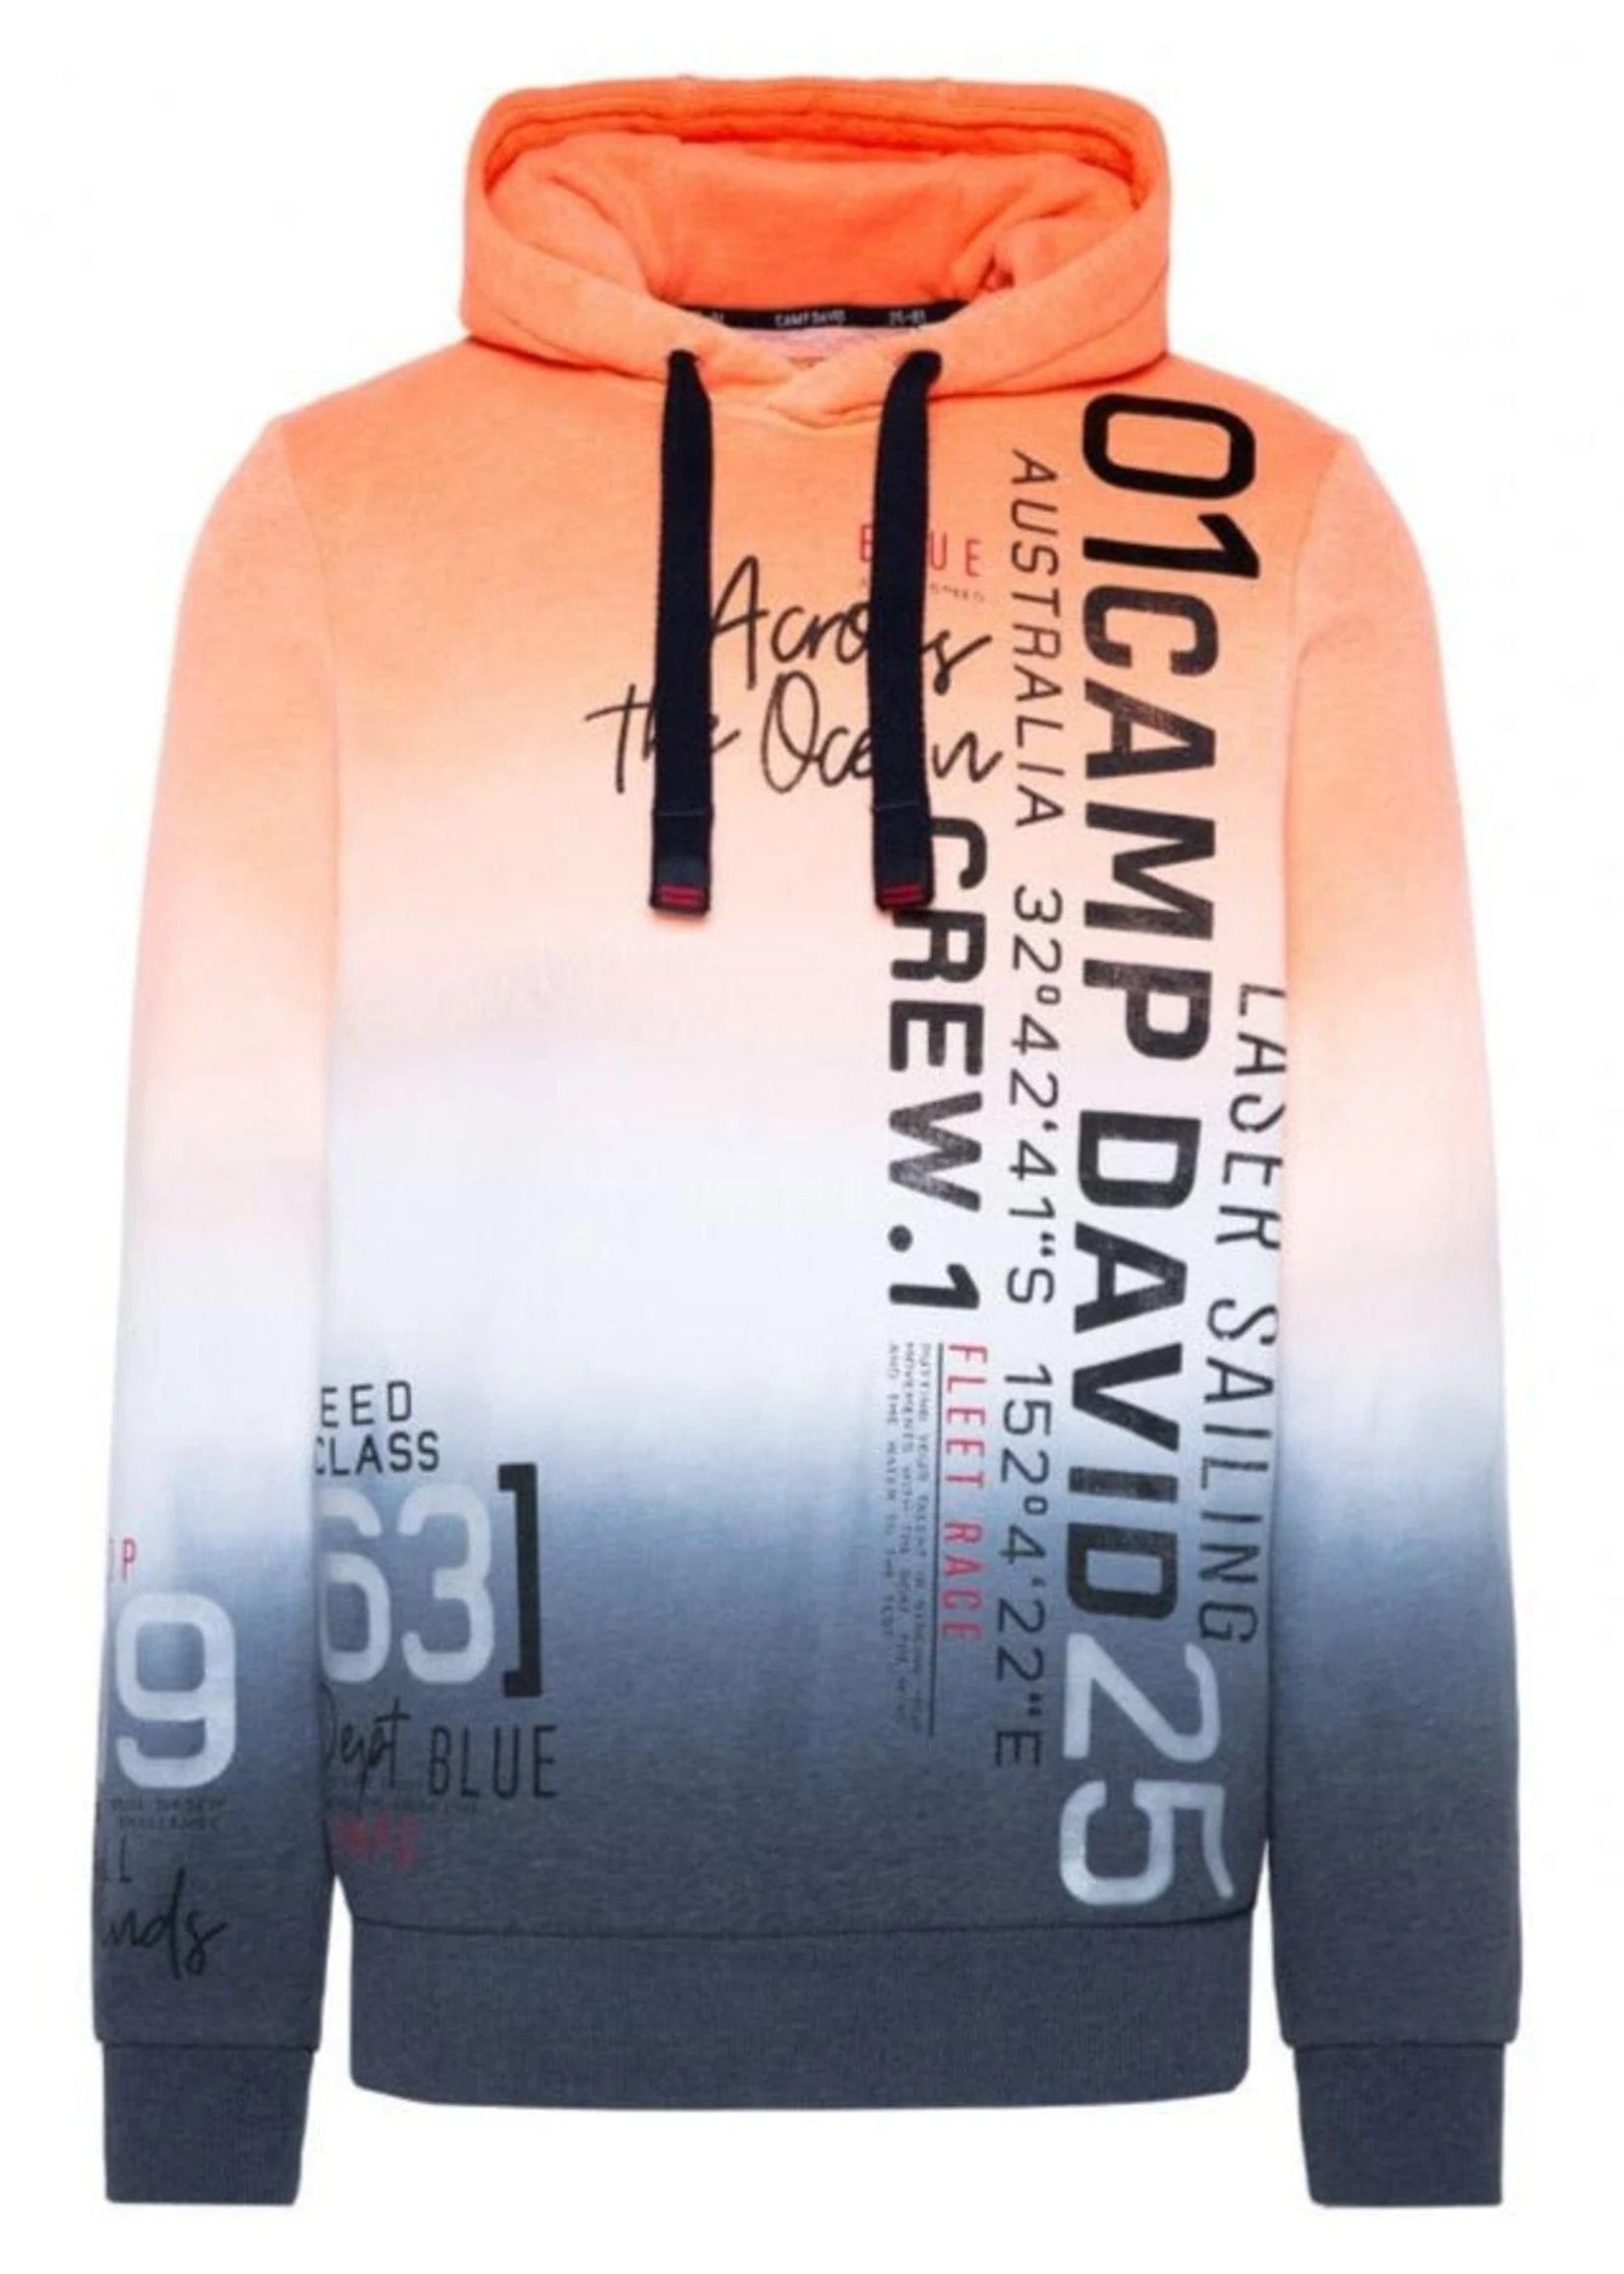 Camp David Hoodie sweatshirt dip dye with logo prints, orange